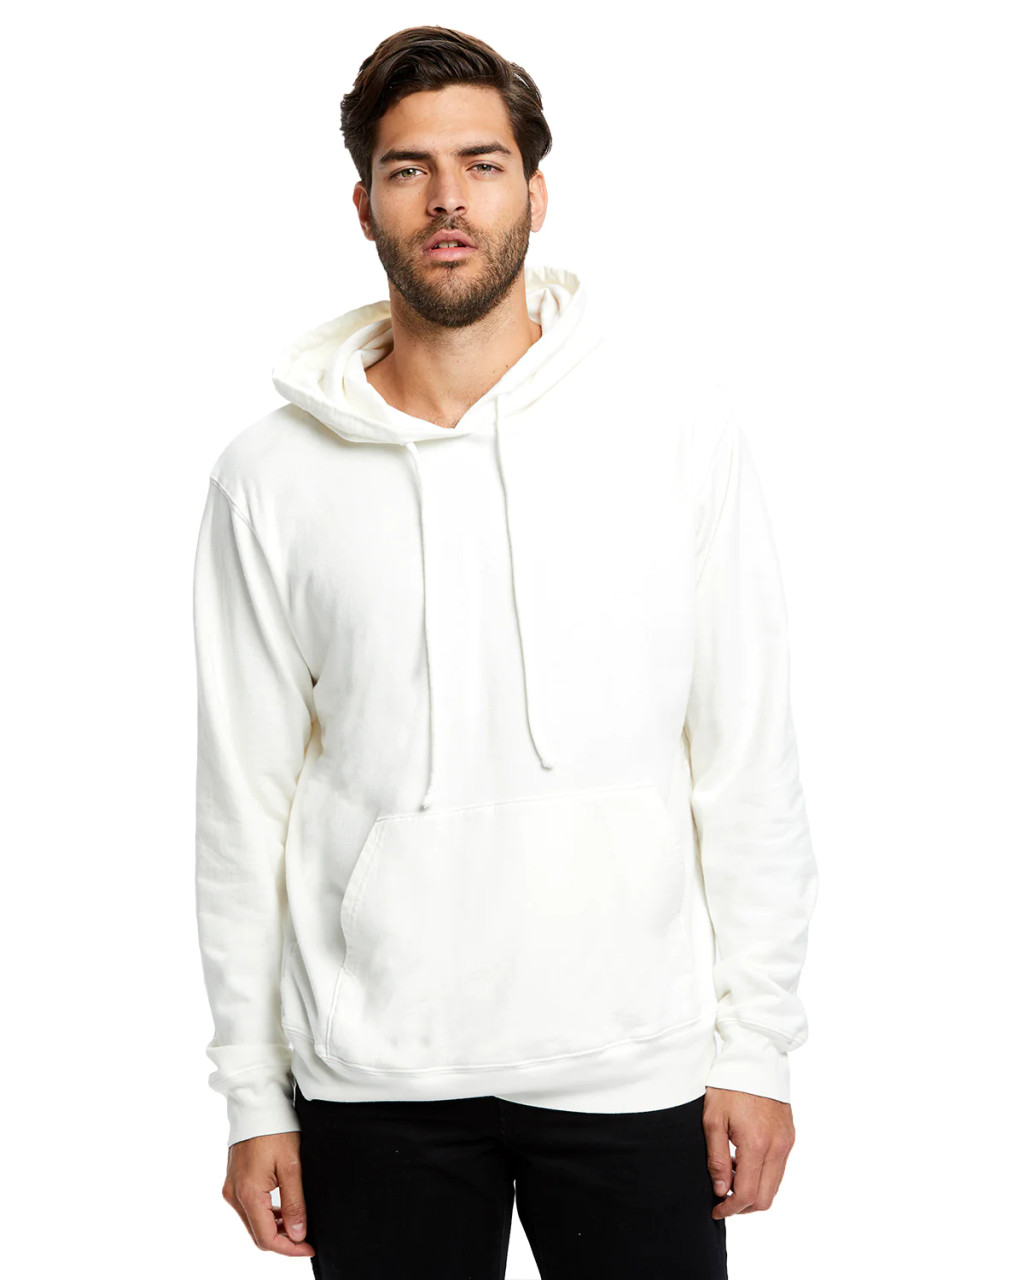 The USA Essential Sweatshirt - 100% Cotton Hoody